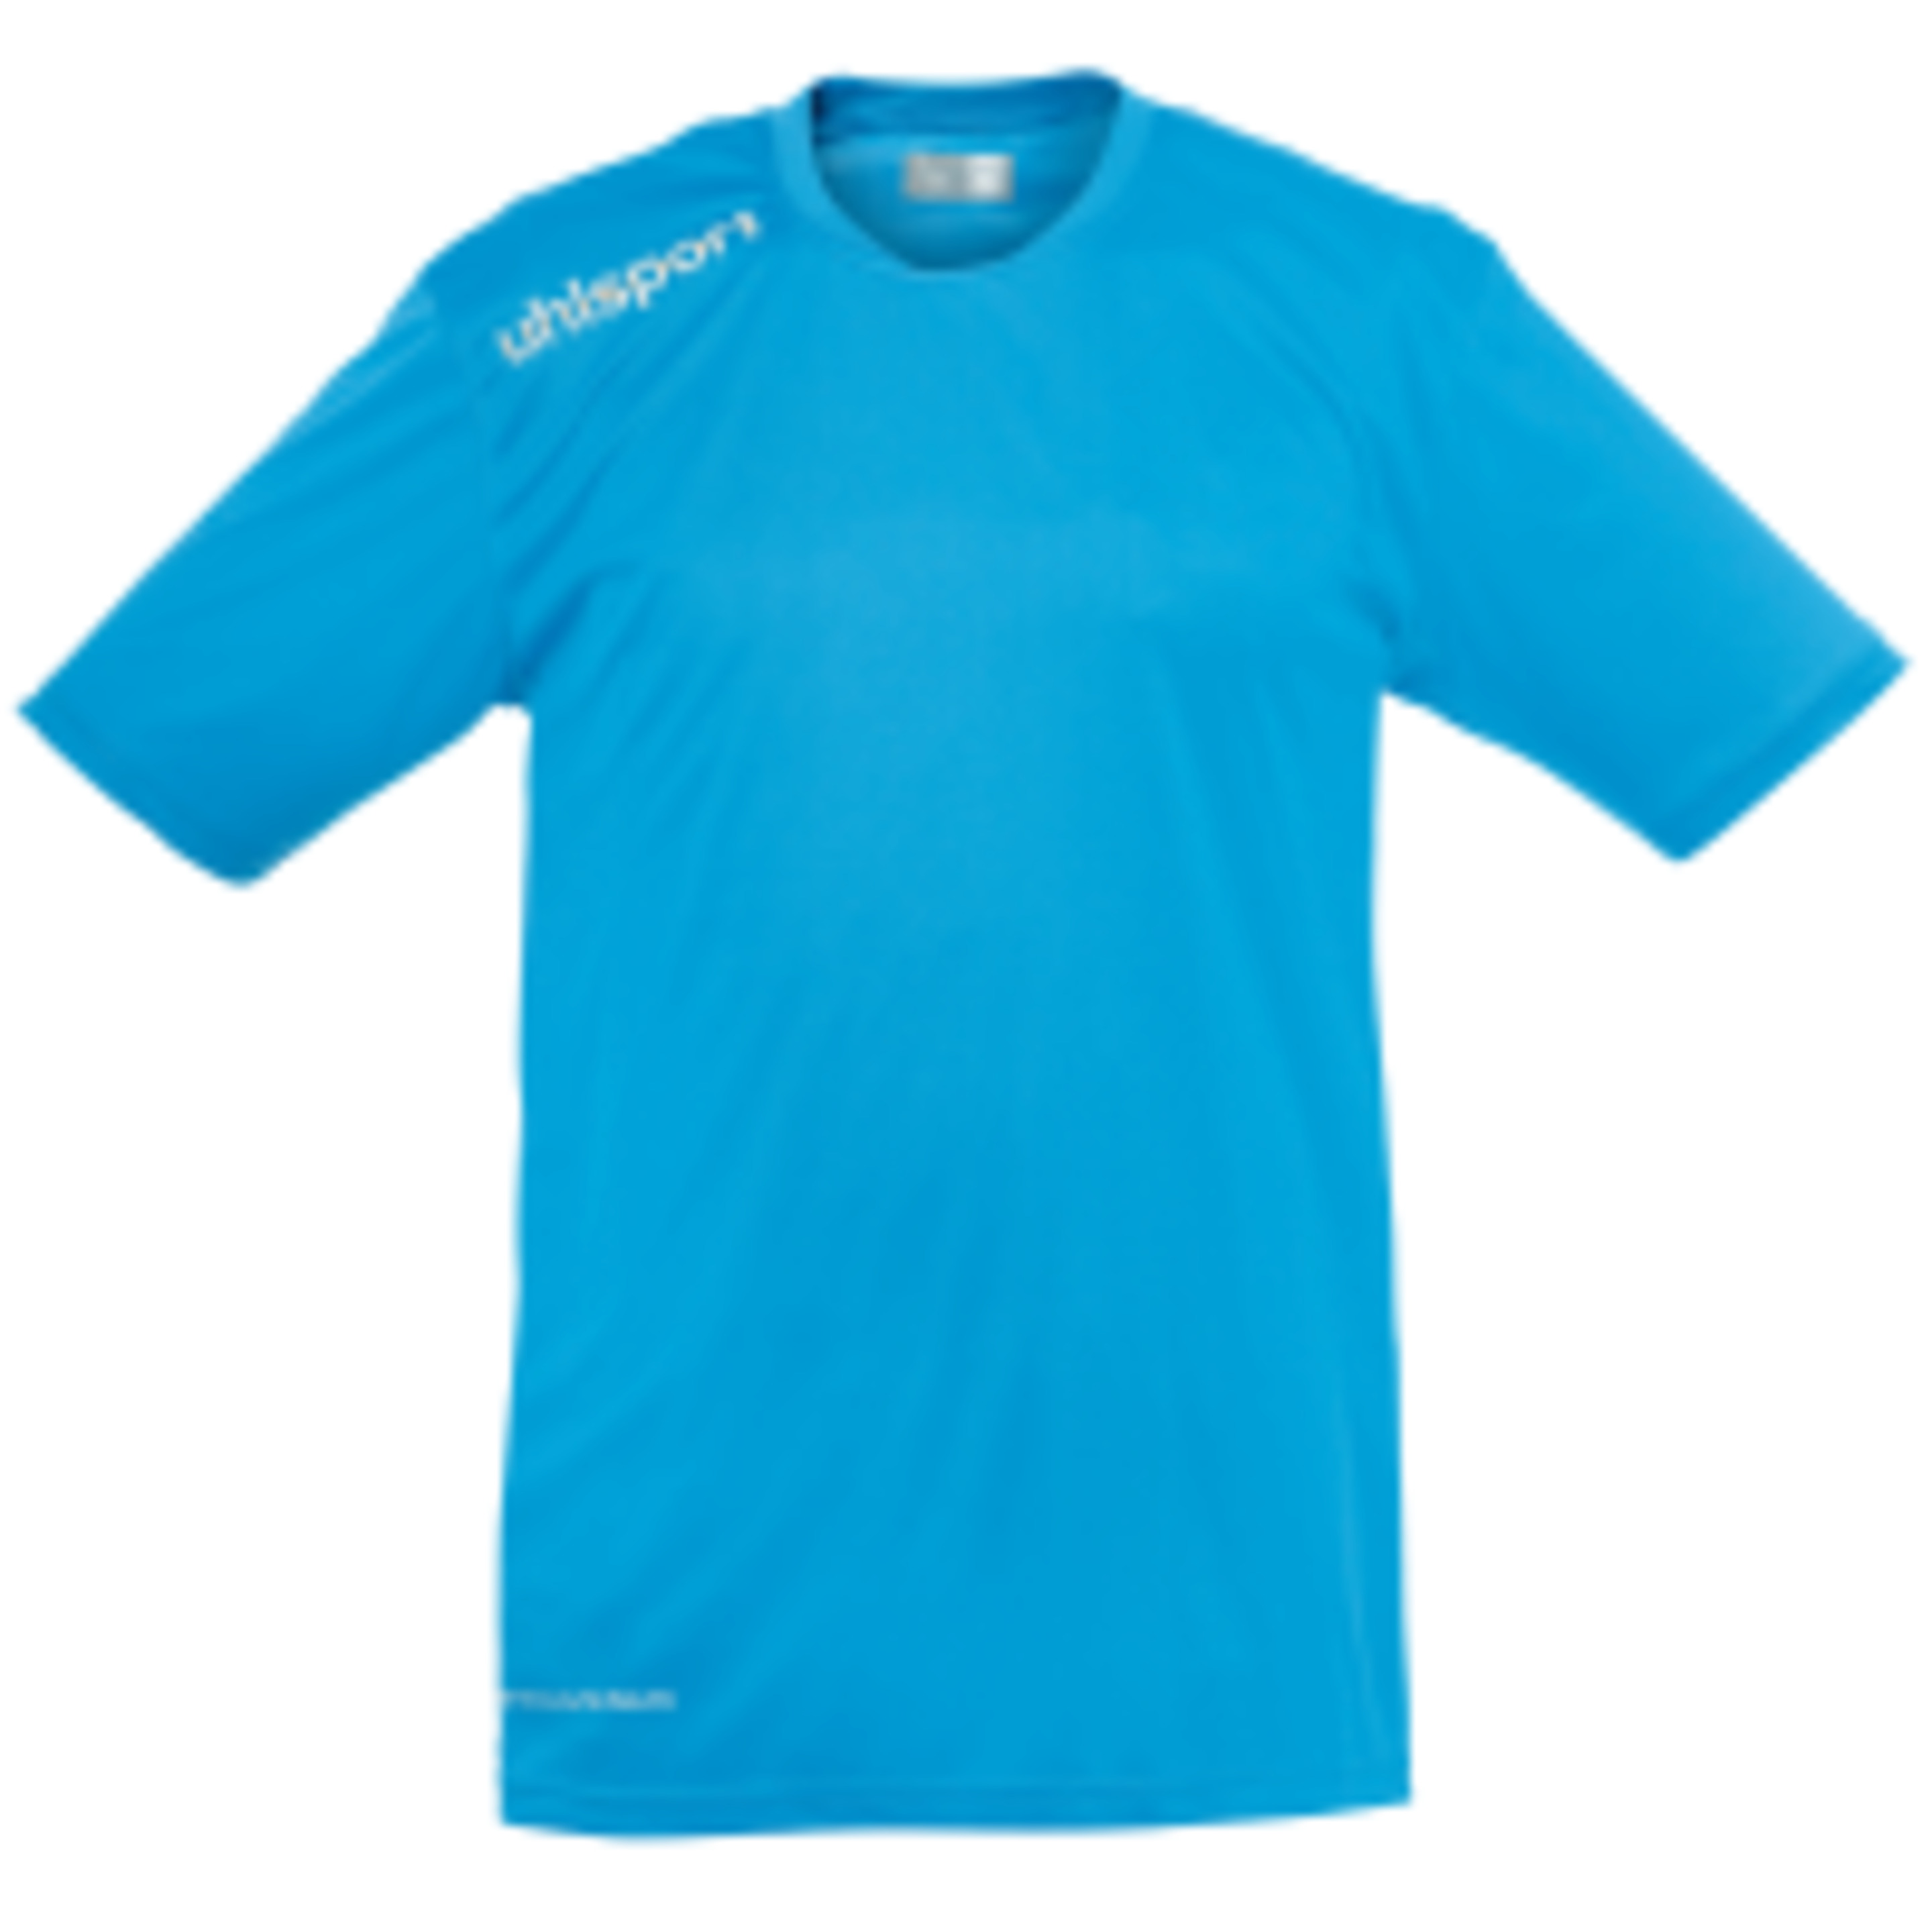 Essential Pes Camiseta De Entrenamiento Cyan Uhlsport - azul - 